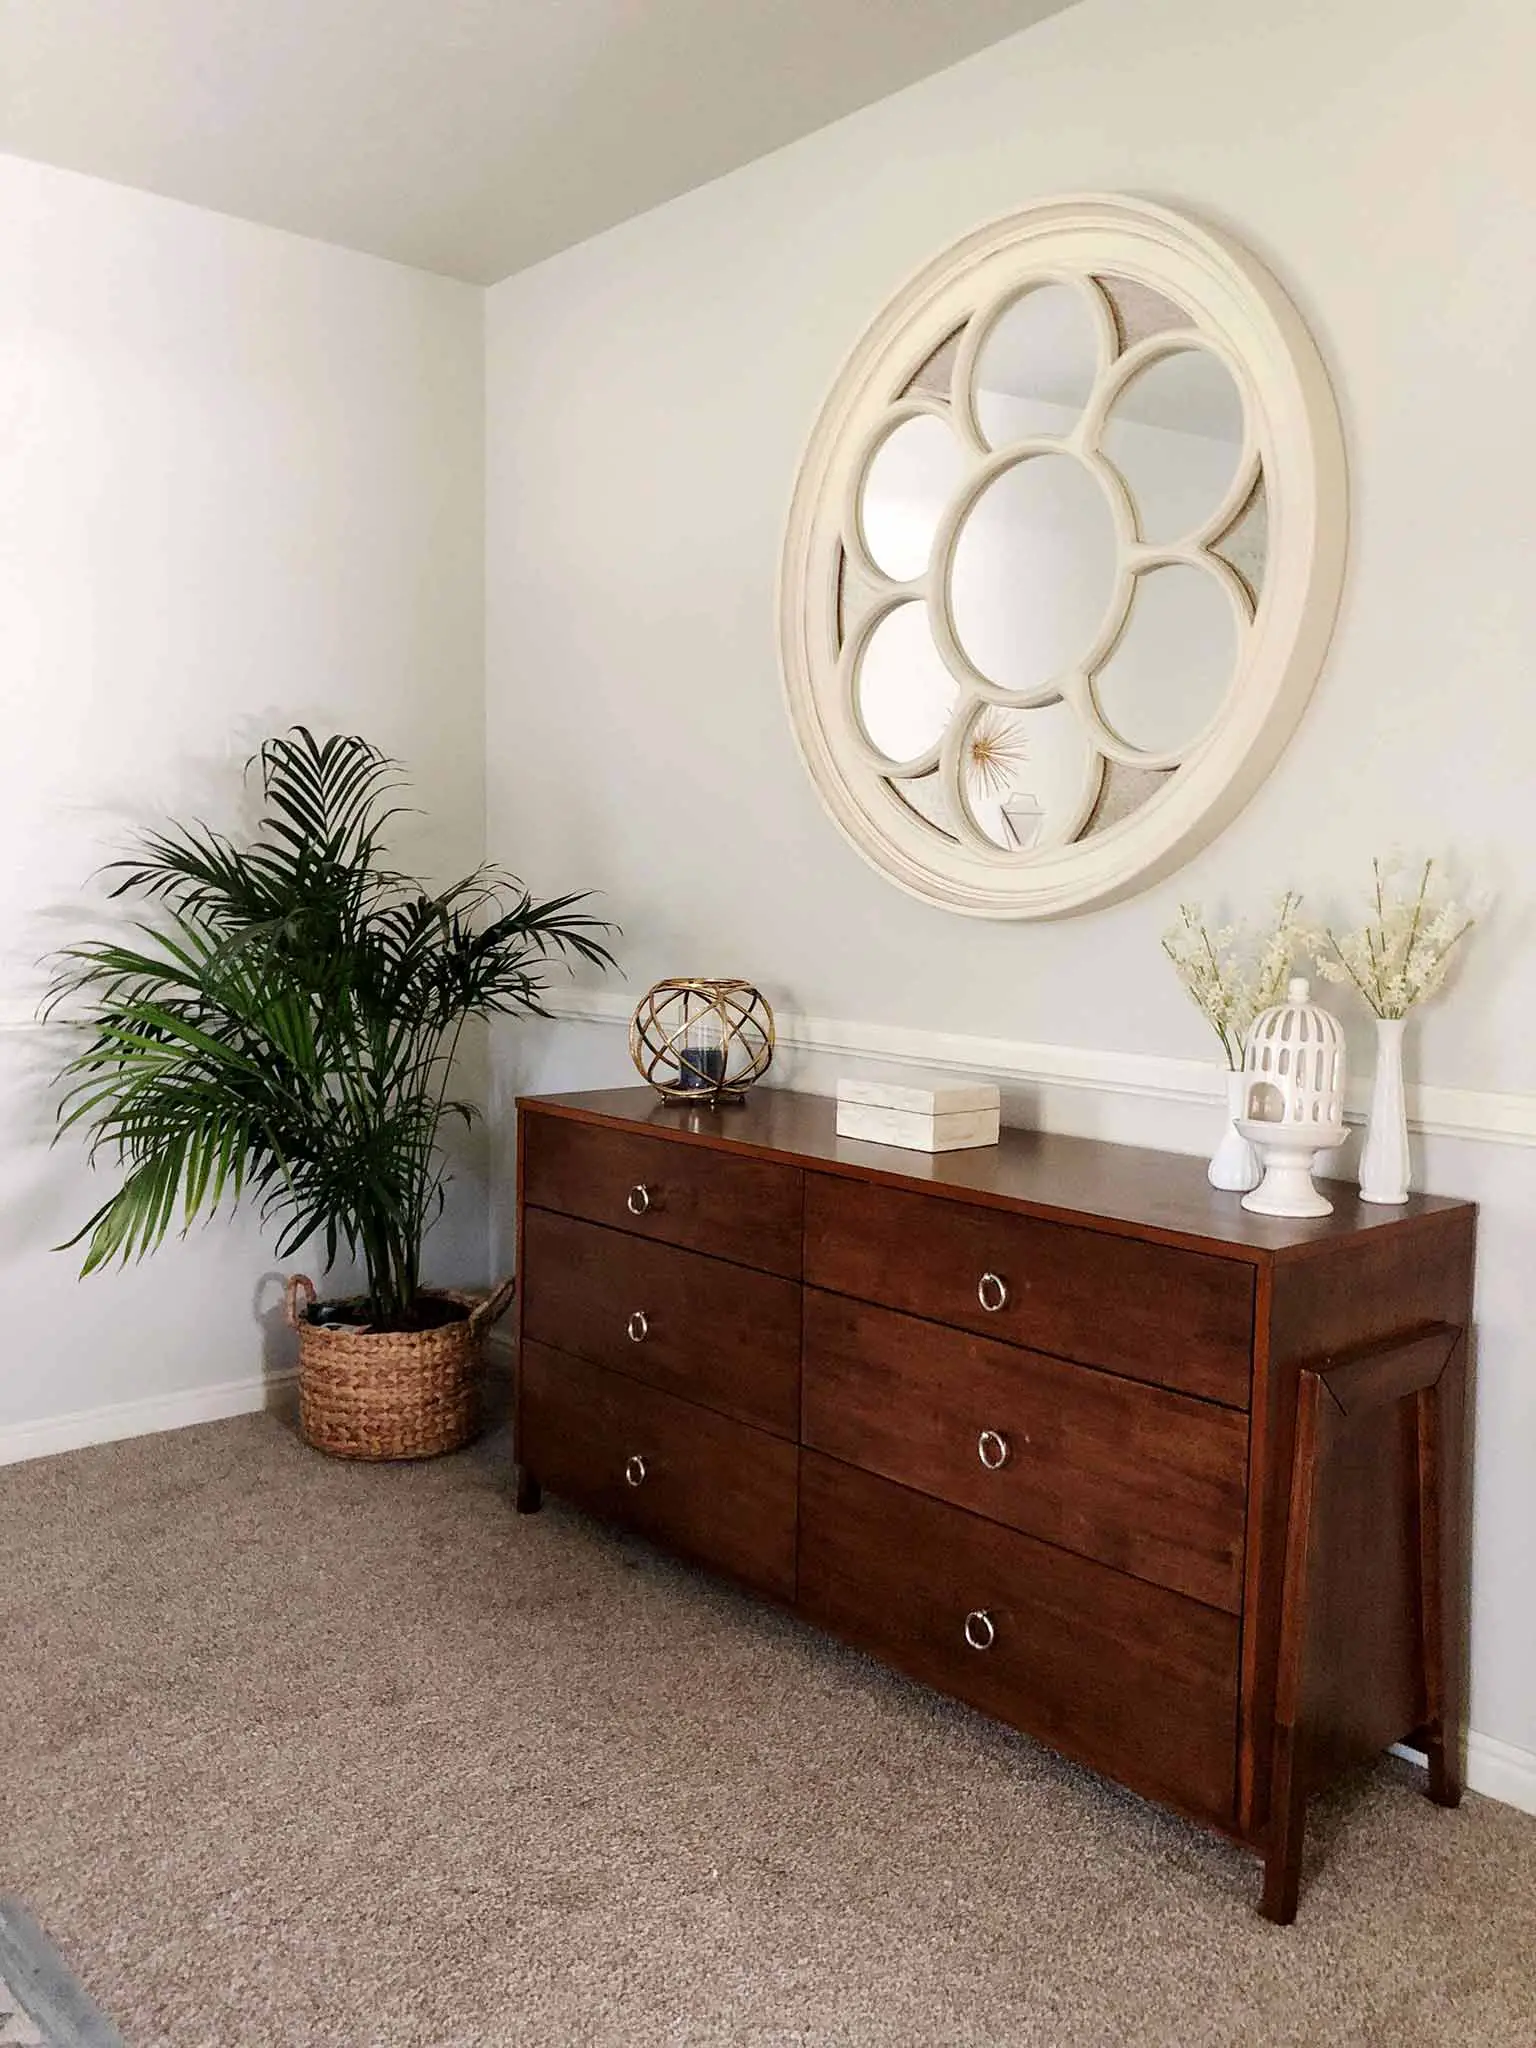 AFTER - Mid Century Modern, Coastal, Master Bedroom Makeover - That Homebird Life Blog